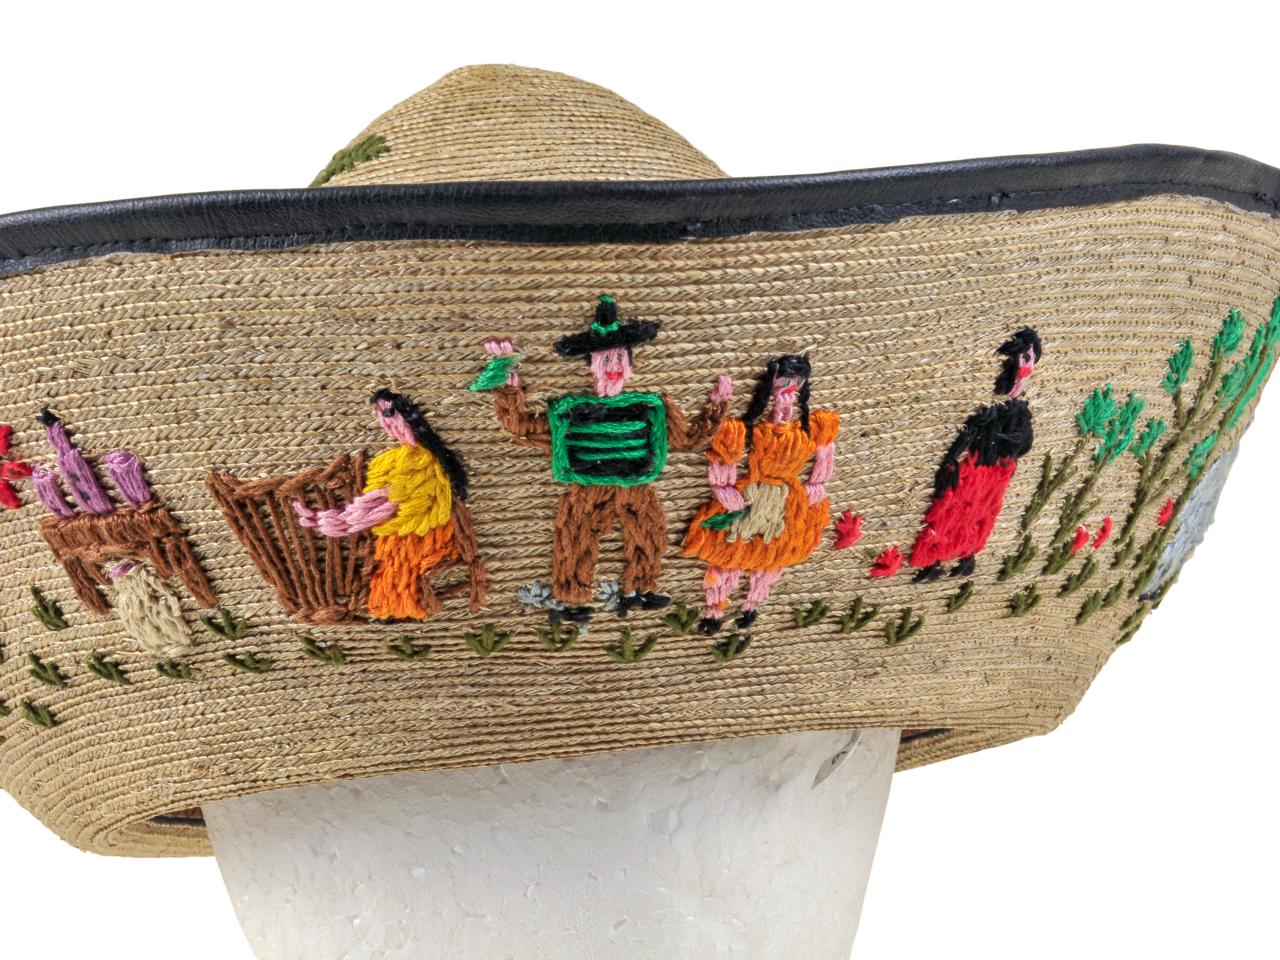 Detalle de bonete huicano bordado, tejido en paja teatina teñida con tintes naturales